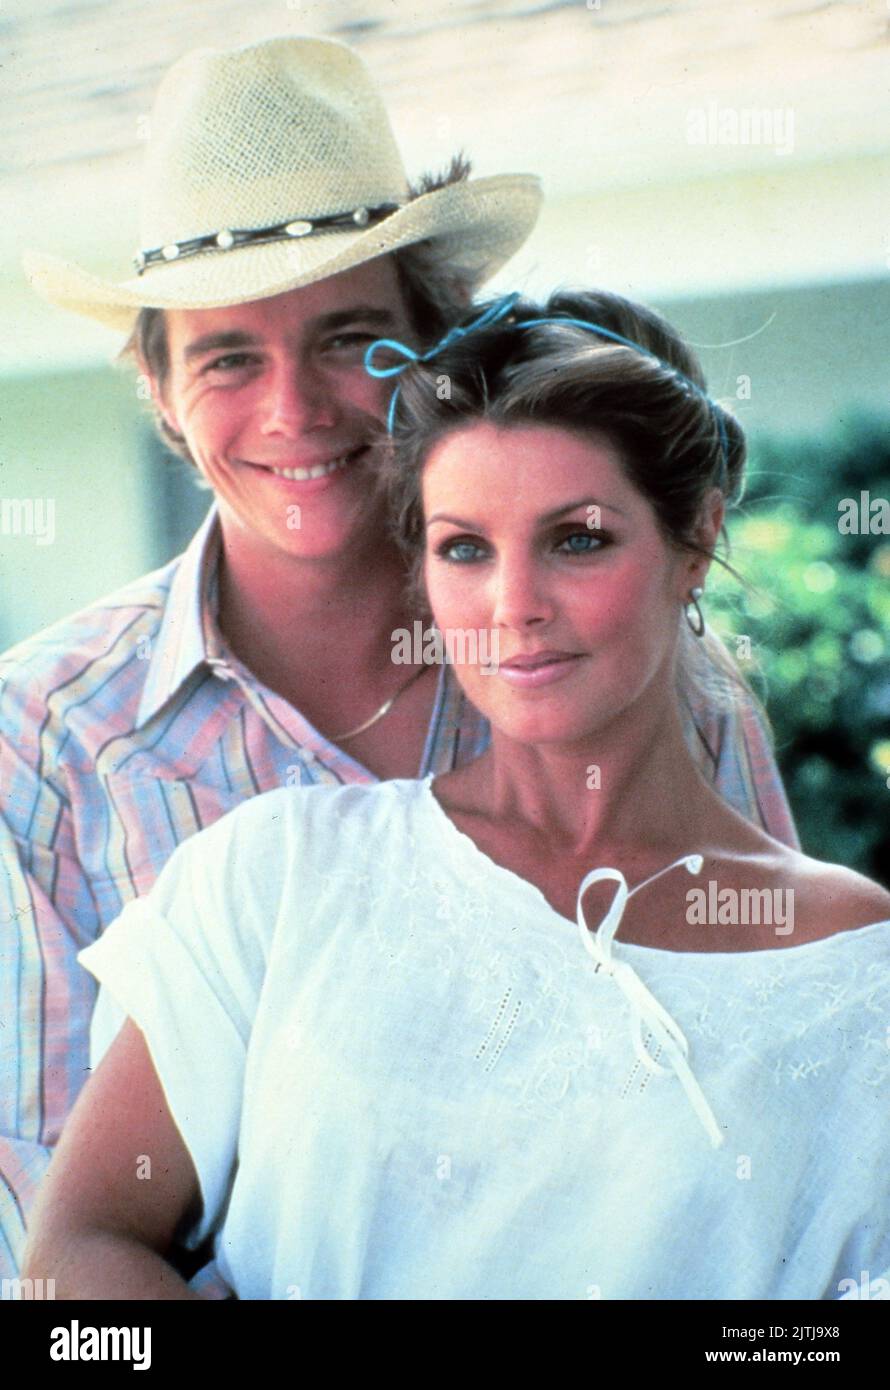 Dallas, Fernsehserie, USA 1978 - 1991, Darsteller: Priscilla Beaulieu Presley Banque D'Images